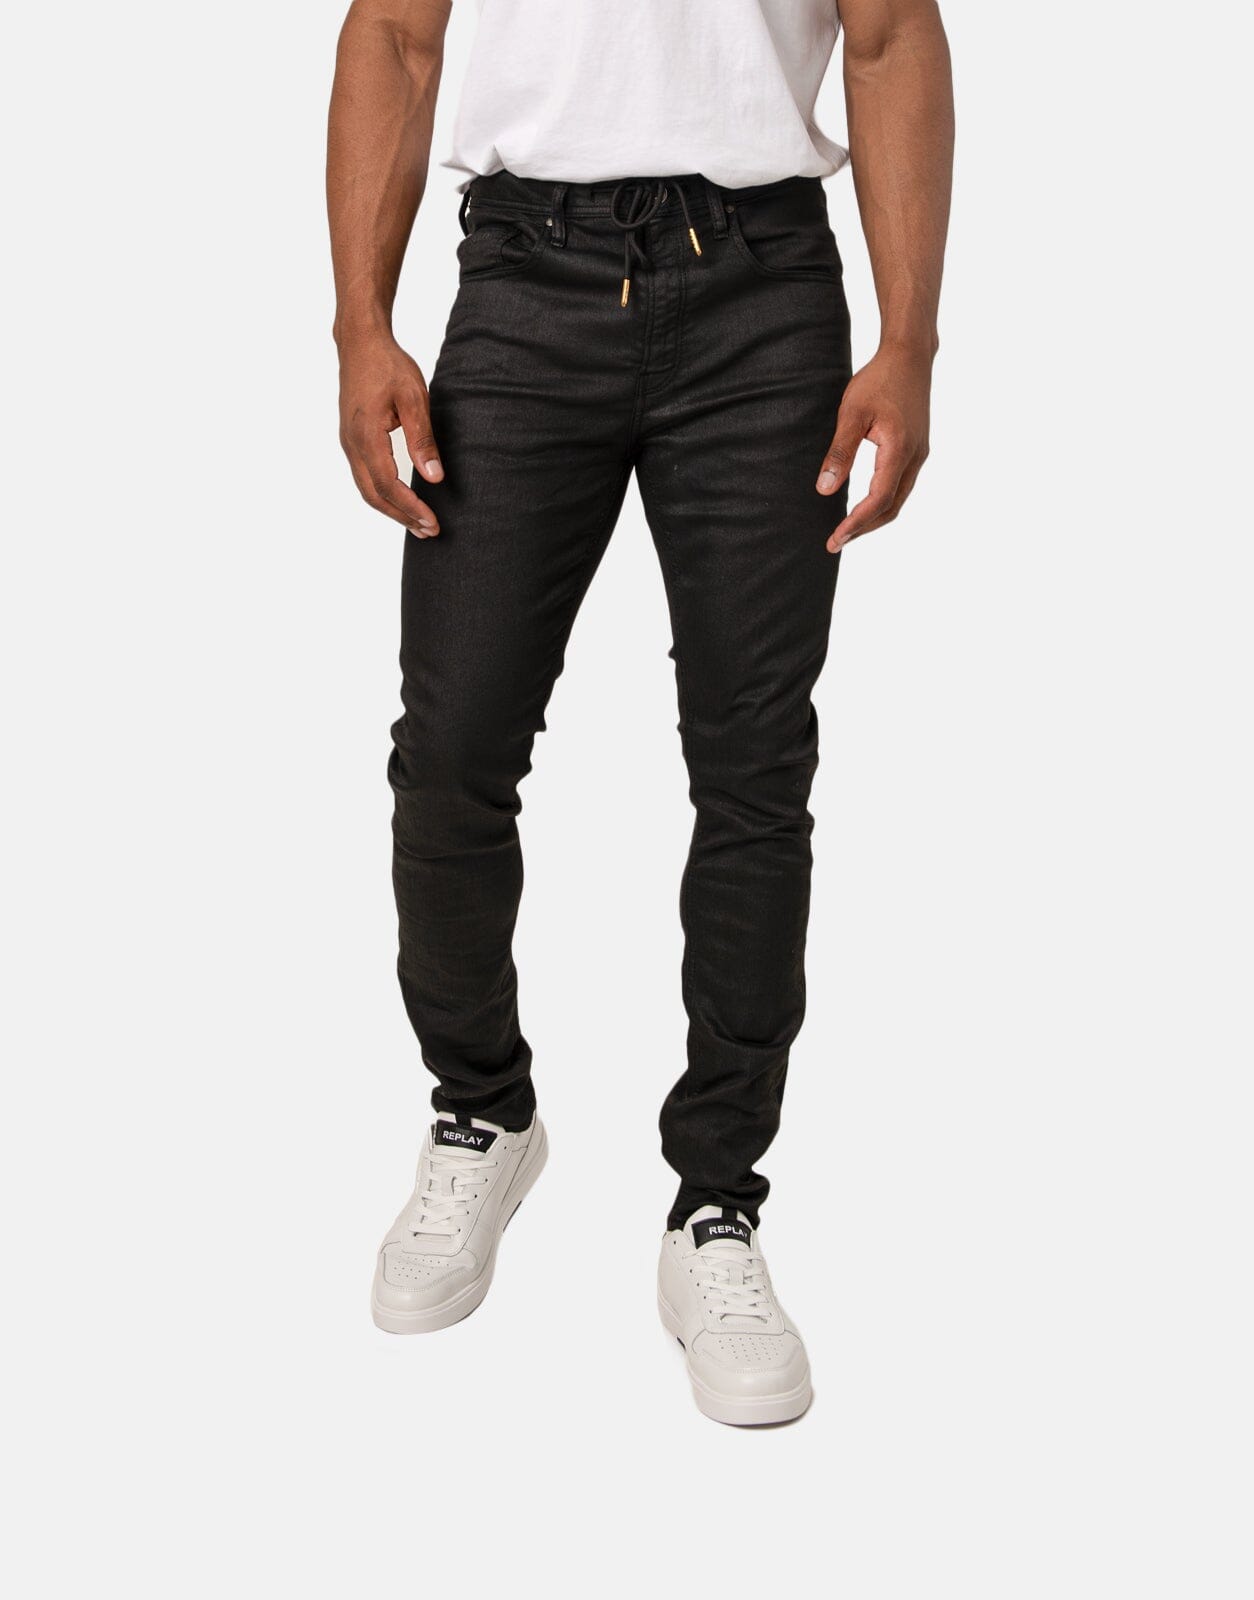 Vialli Elvinios Black Jogger Jeans